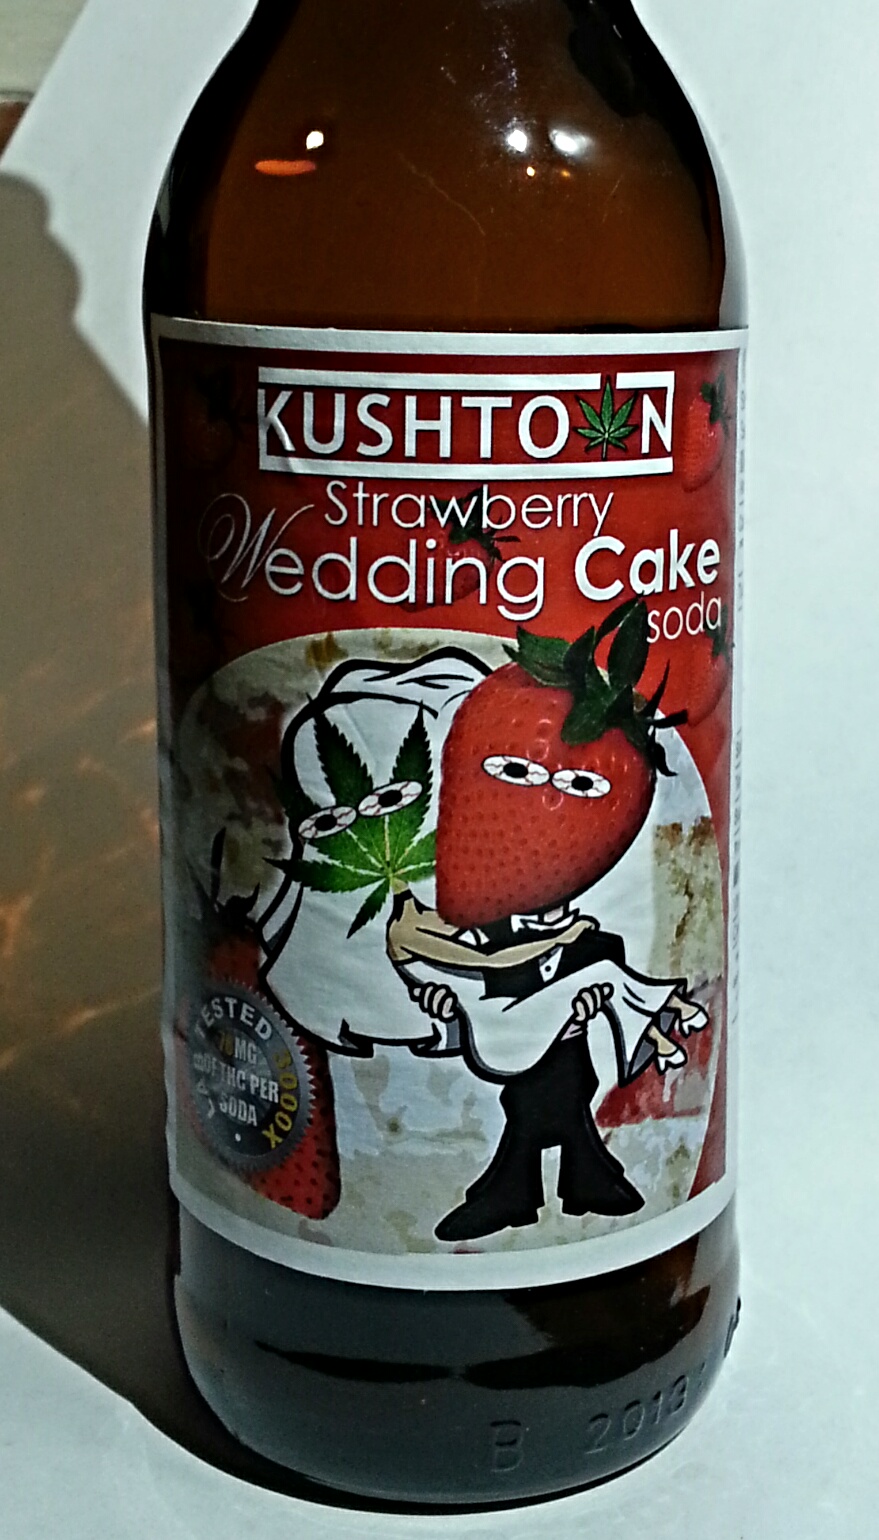 Strawberry Wedding Cake from Kushtown Soda